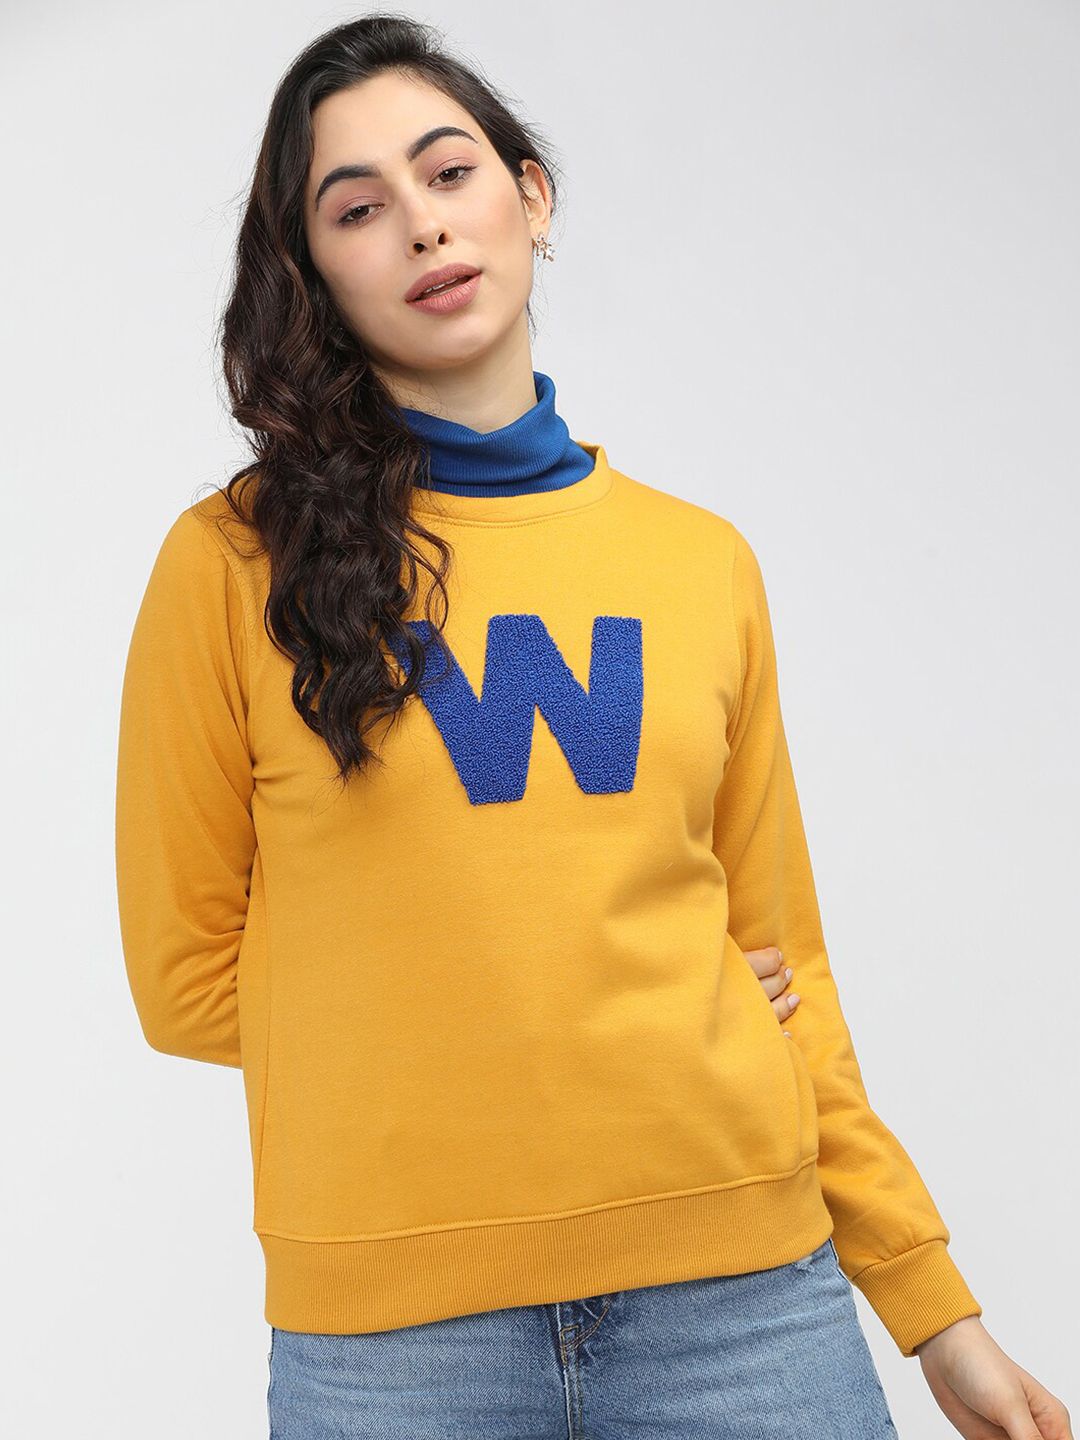 Tokyo Talkies Women Mustard Yellow Printed Sweatshirt Price in India